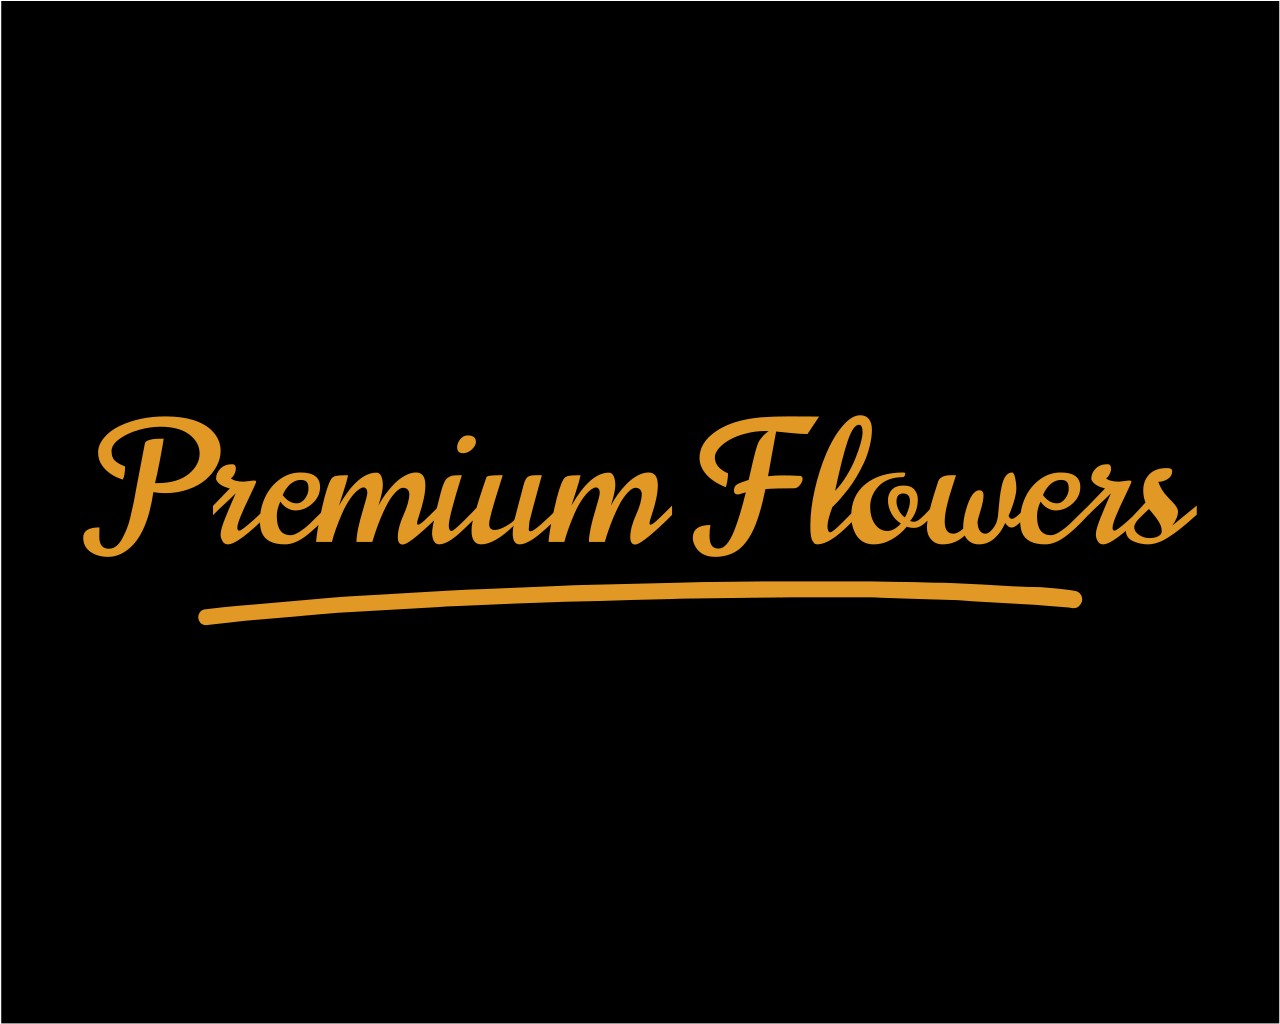 Premium Flowers Logo gold writing on black background.